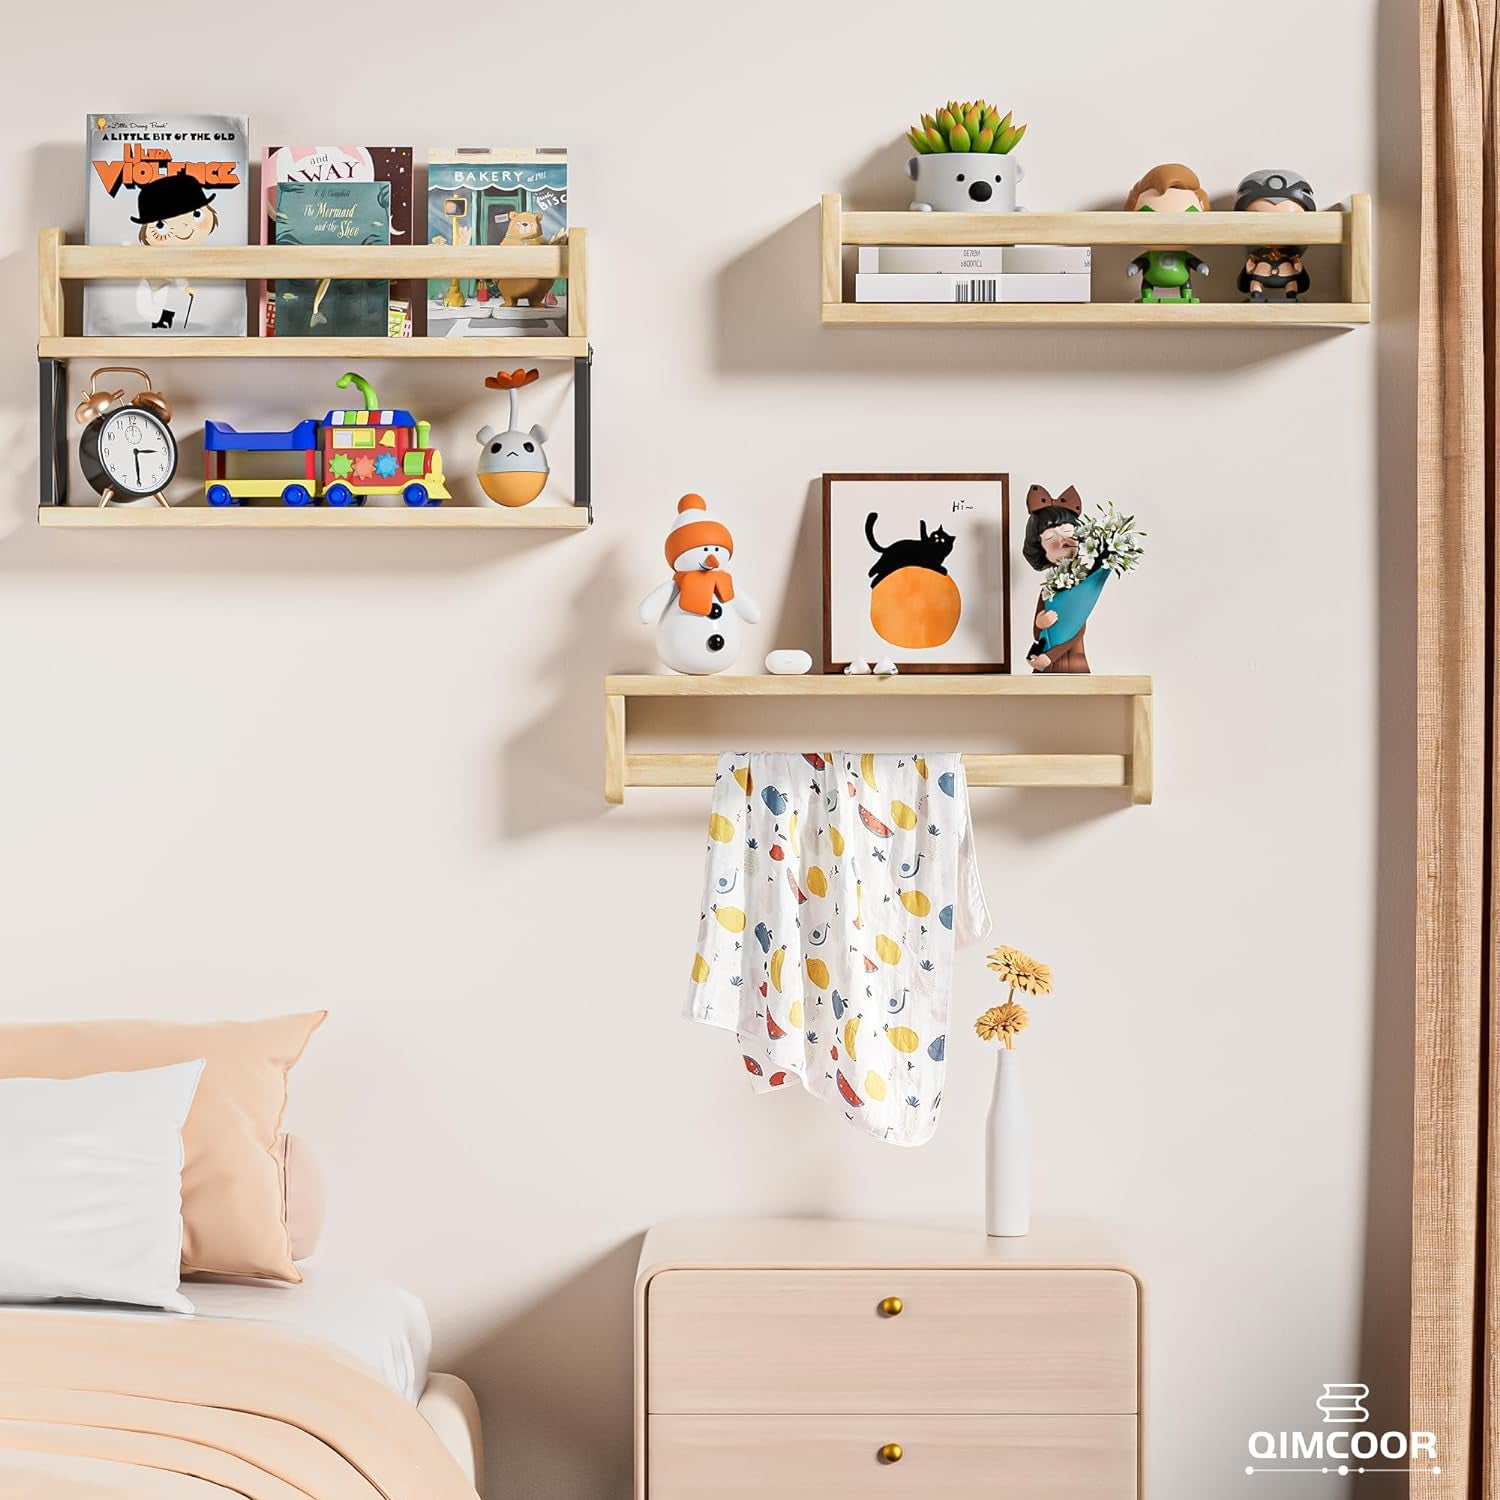 Nursery Book Shelves Set of 4+1, 16.5Inch Floating Wall Bookshelf for Kids Room, Natural Solid Wood Book Shelf for Baby Nursery Room, Wall Shelves for Bedroom Decor, Toy Storage Shelves